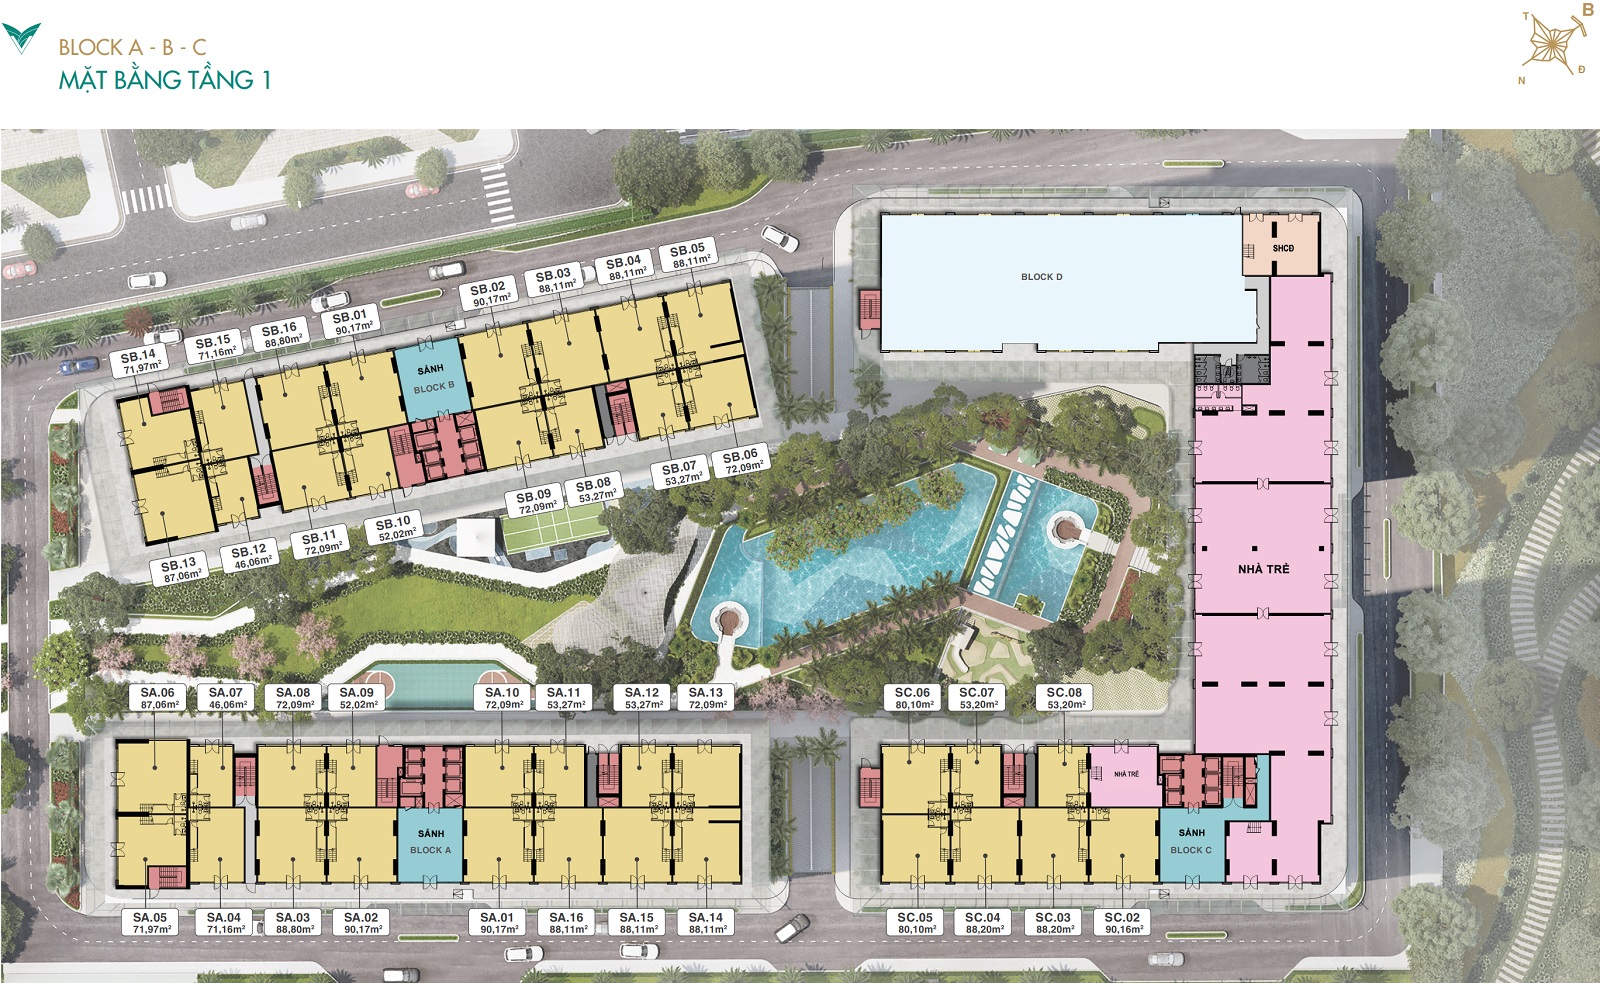 Ground floor plan of Lavita Thuan An Binh Duong project